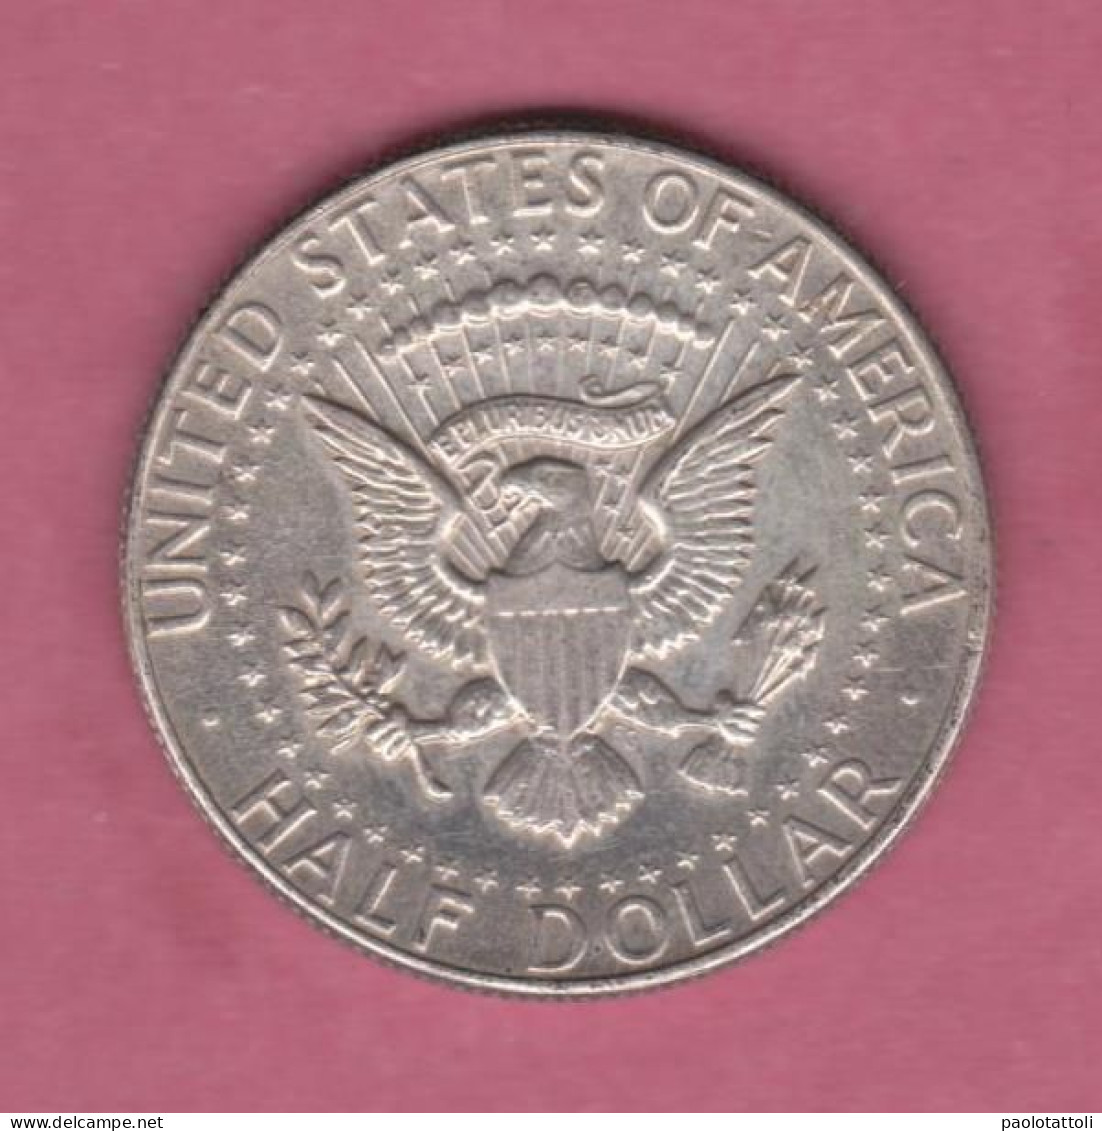 USA, 1964- Half Dollar- 90% Silver- Obverse Portrait Of John F. Kennedy. - Commemorative